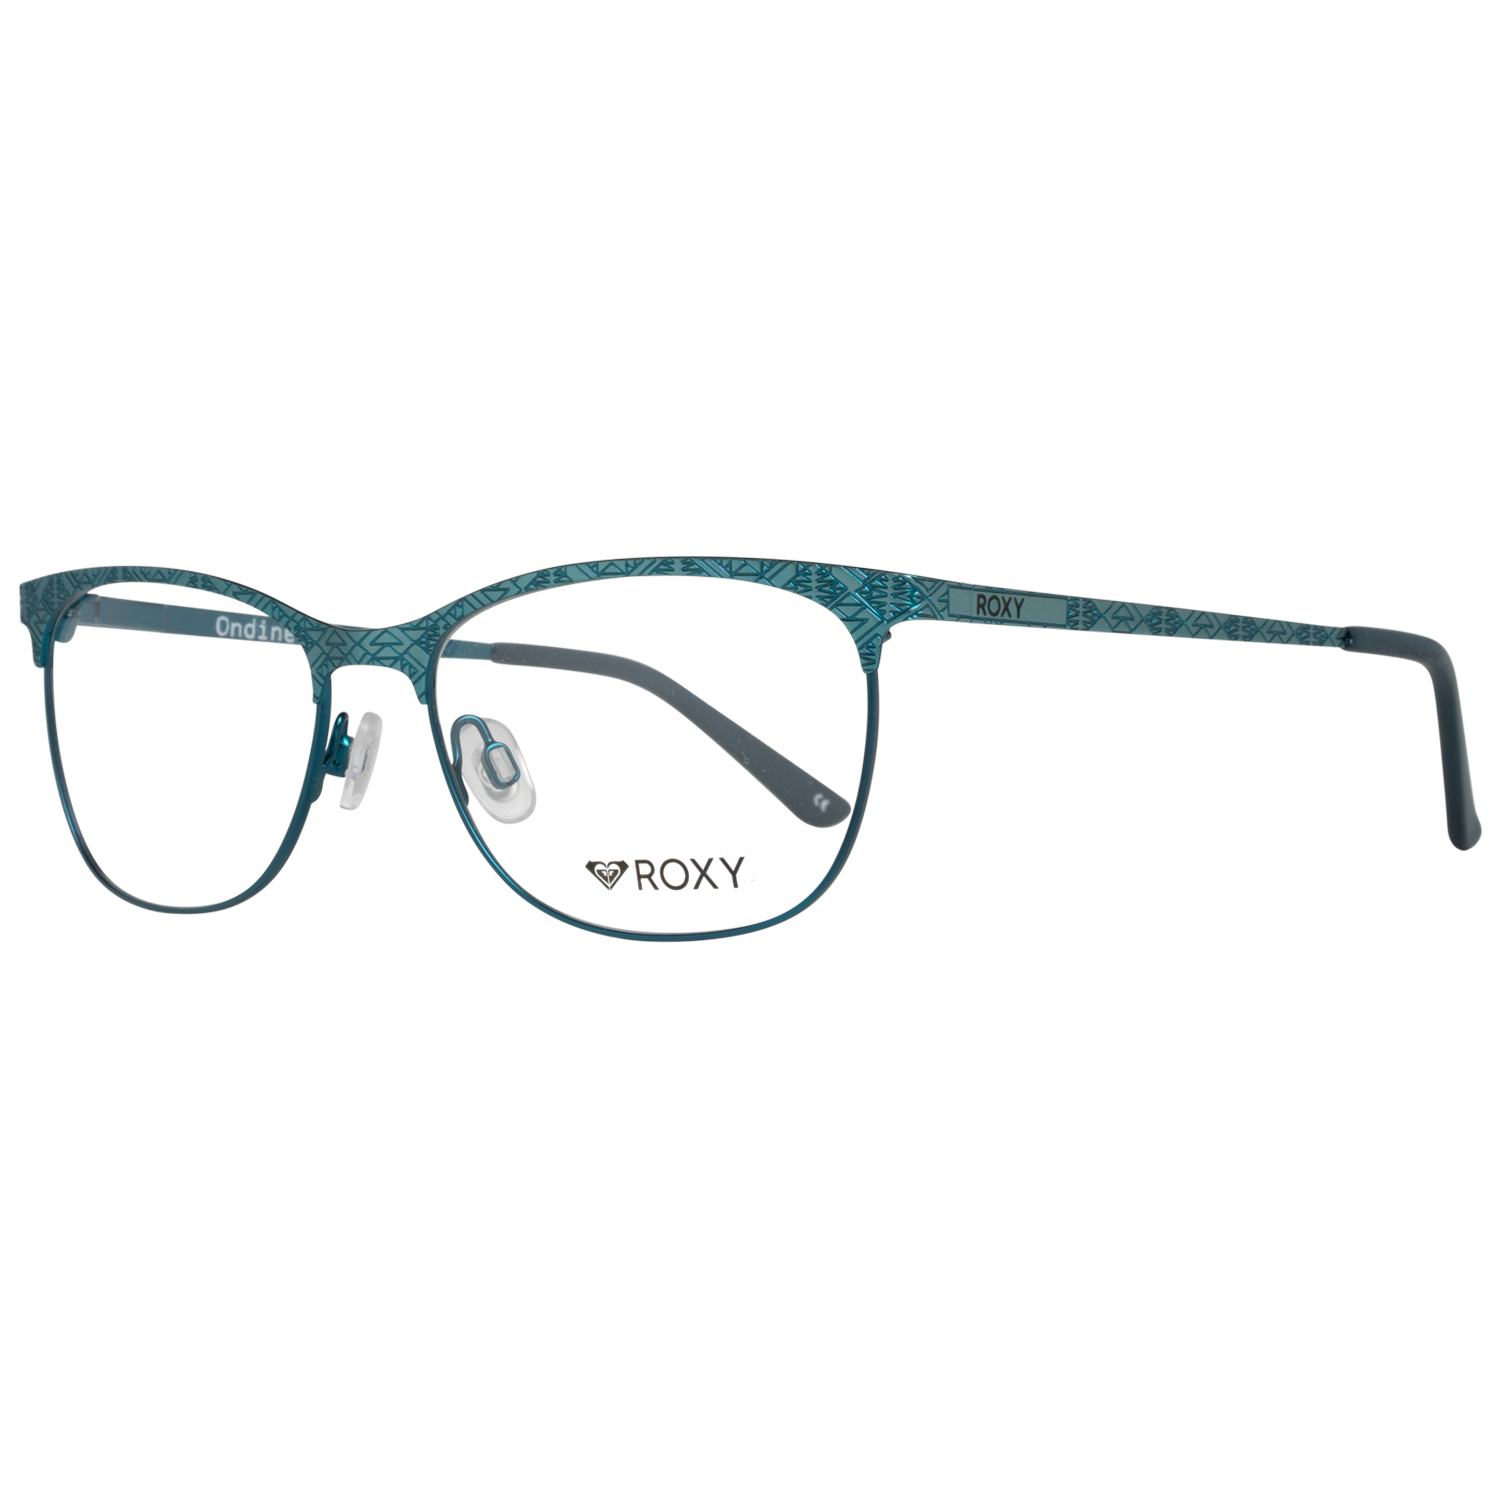 Roxy Frames Roxy Glasses Optical Frame ERJEG03044 AGRN 53 Eyeglasses Eyewear UK USA Australia 